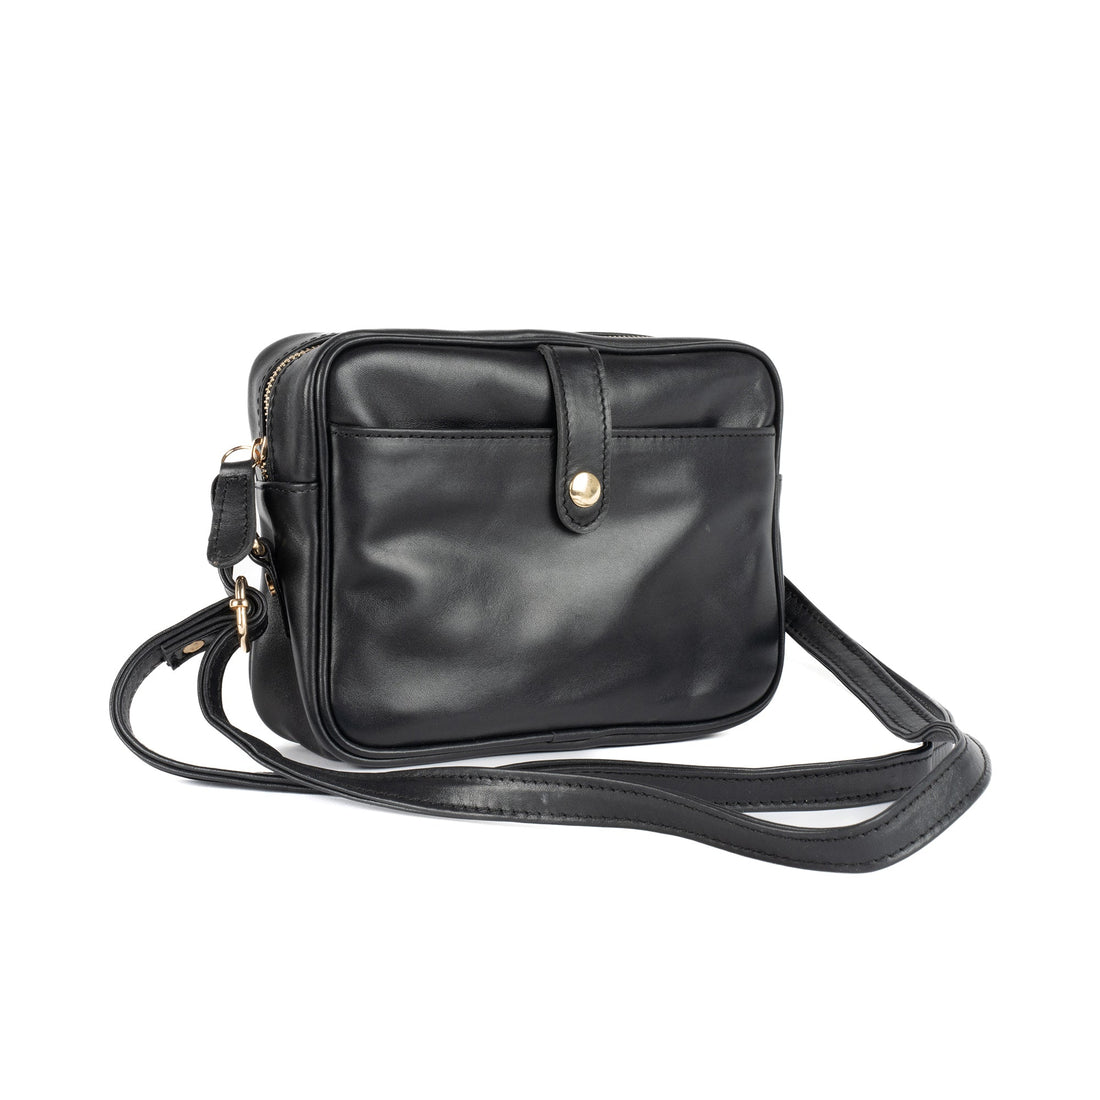 Corydala Leather Crossbody Bag - Black - Bags Zengoda Shop online from Artisan Brands